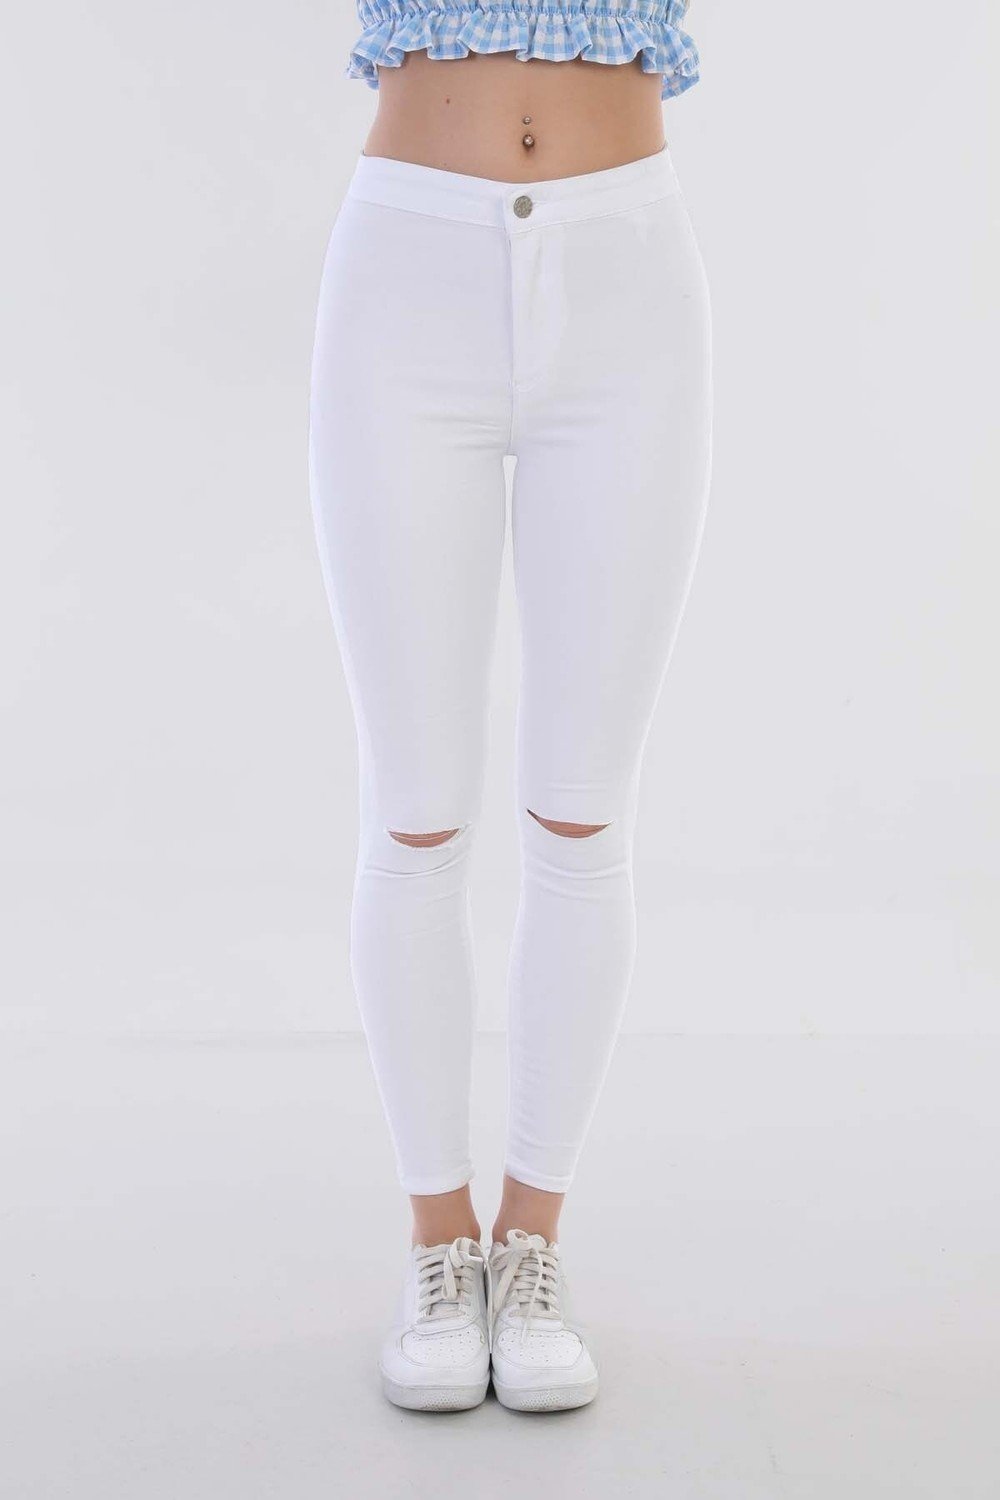 BİKELİFE Pants - White - Skinny